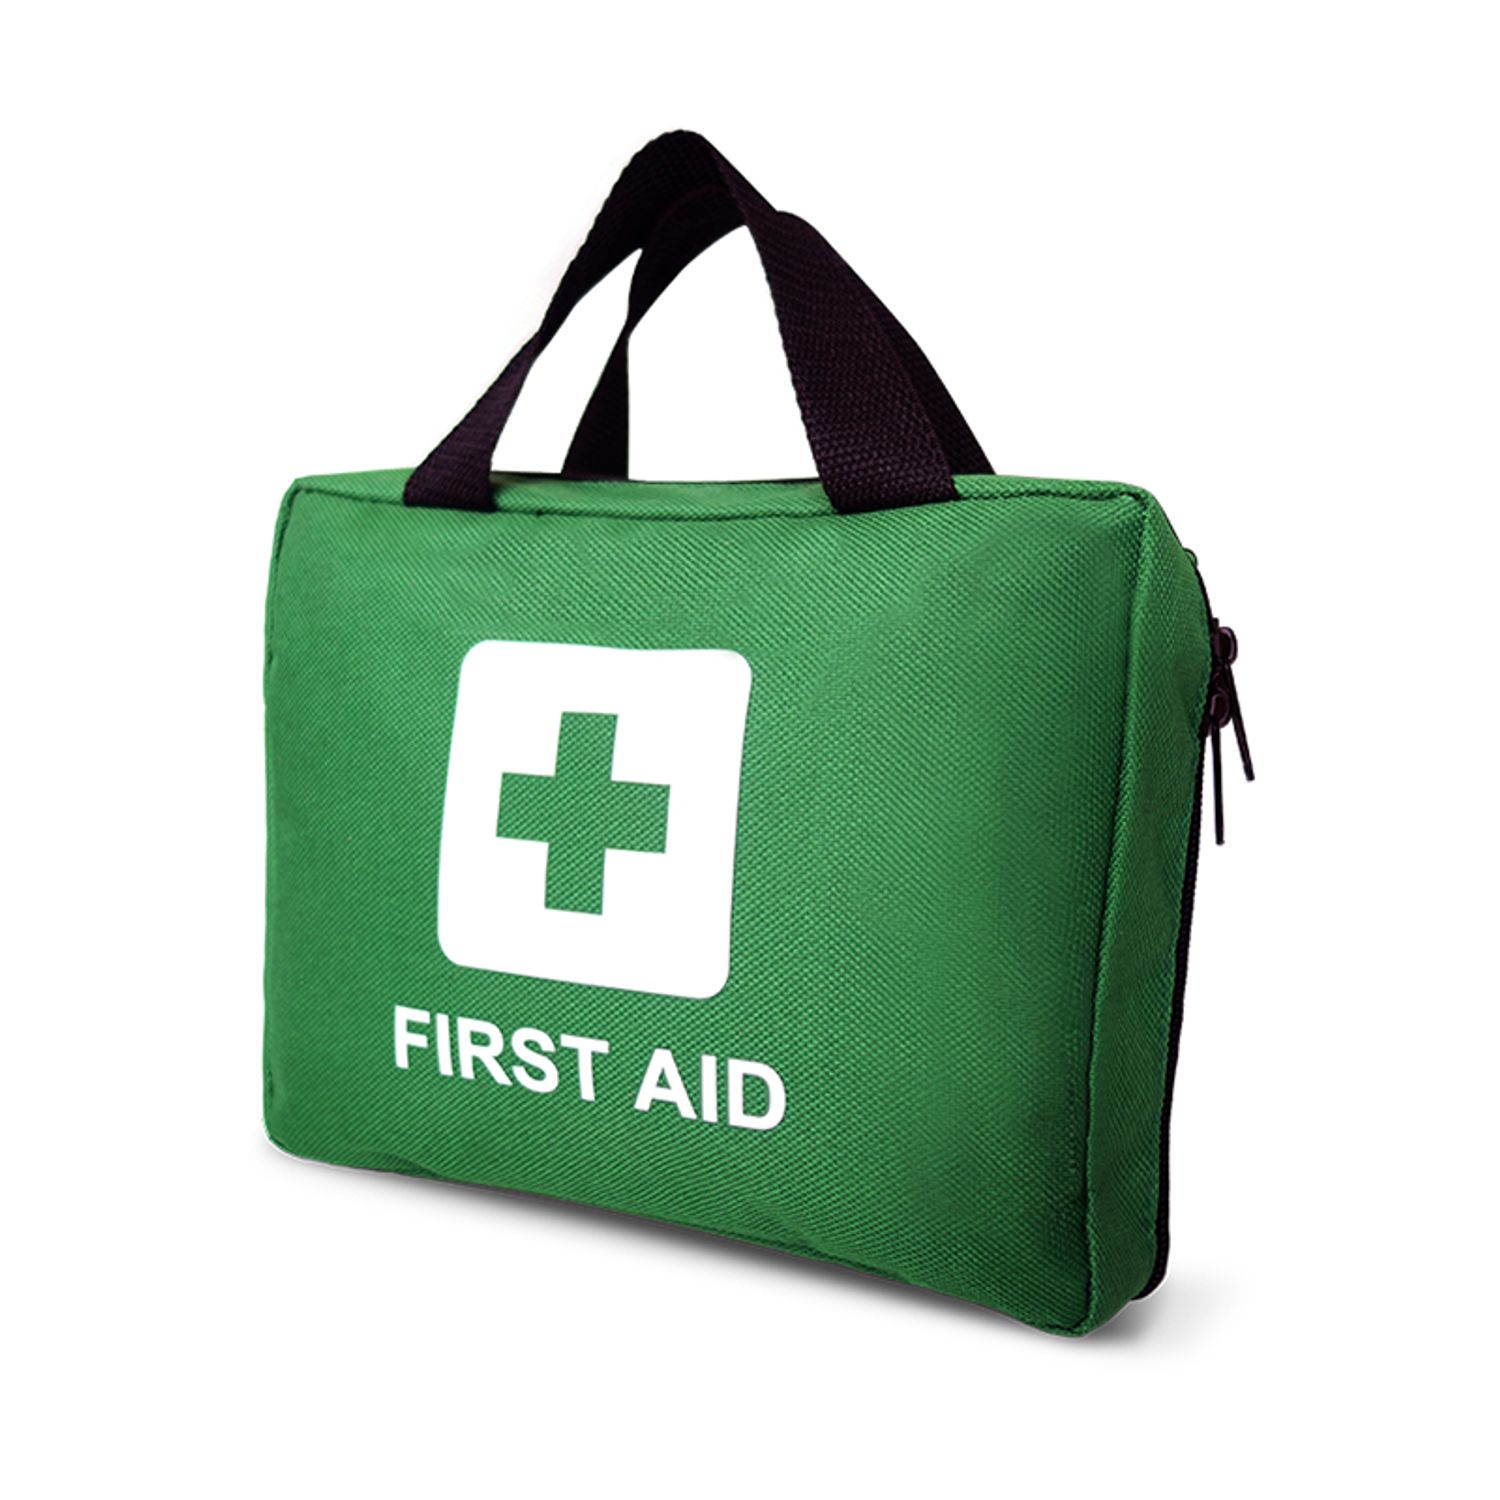 Risen Medical's wholesale Green First Aid Bag 100 pcs